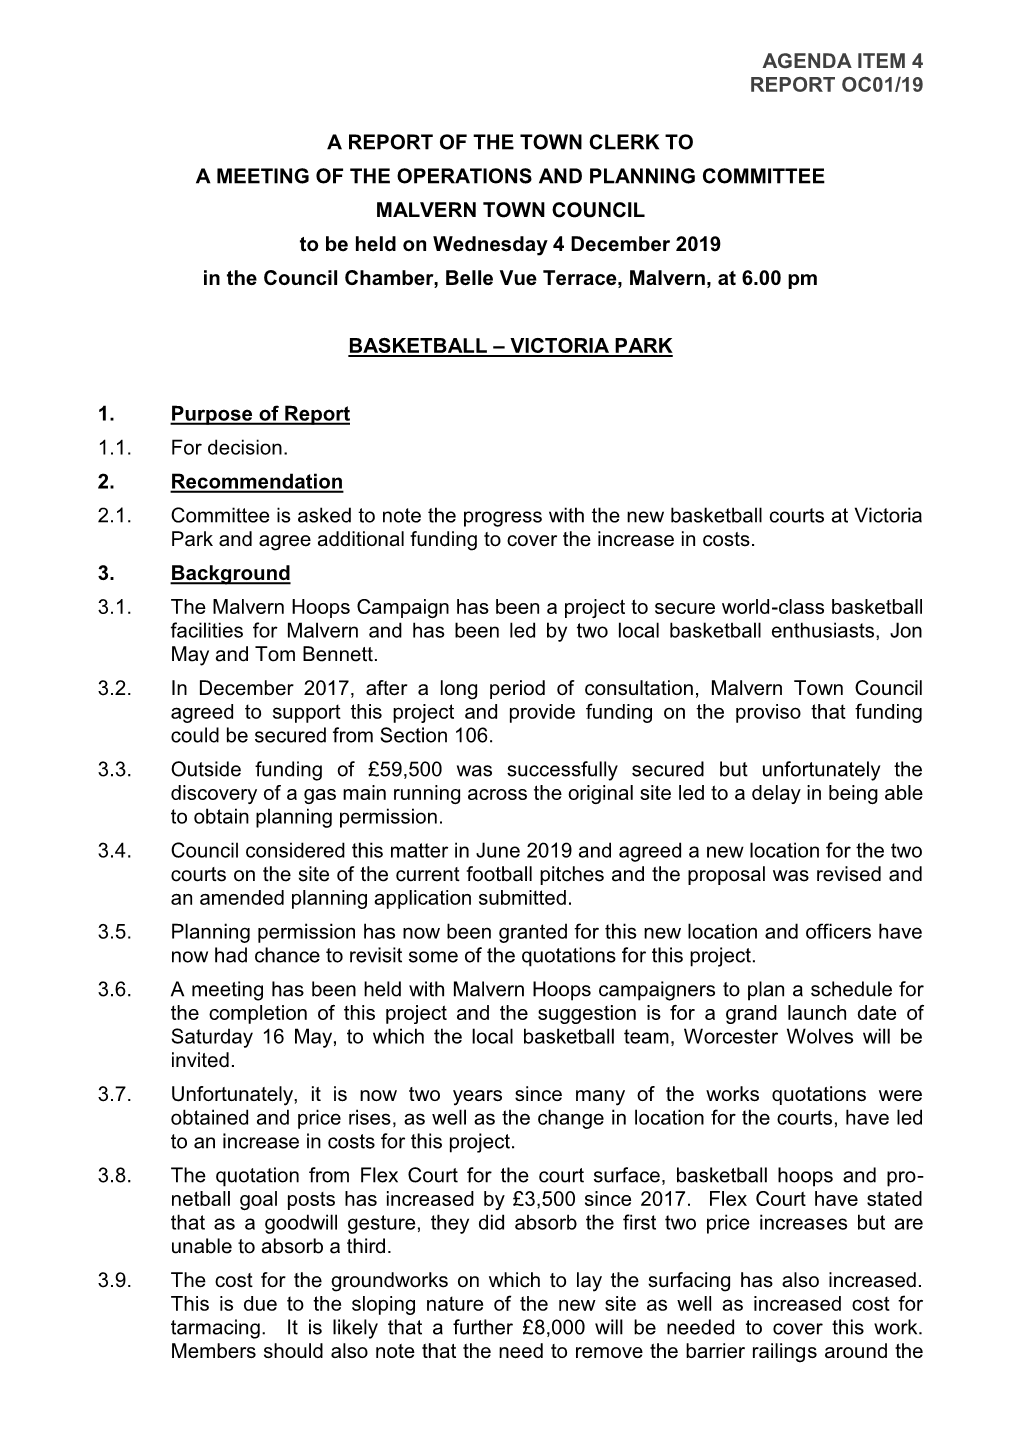 Agenda Item 4 Report Oc01/19 a Report of the Town Clerk